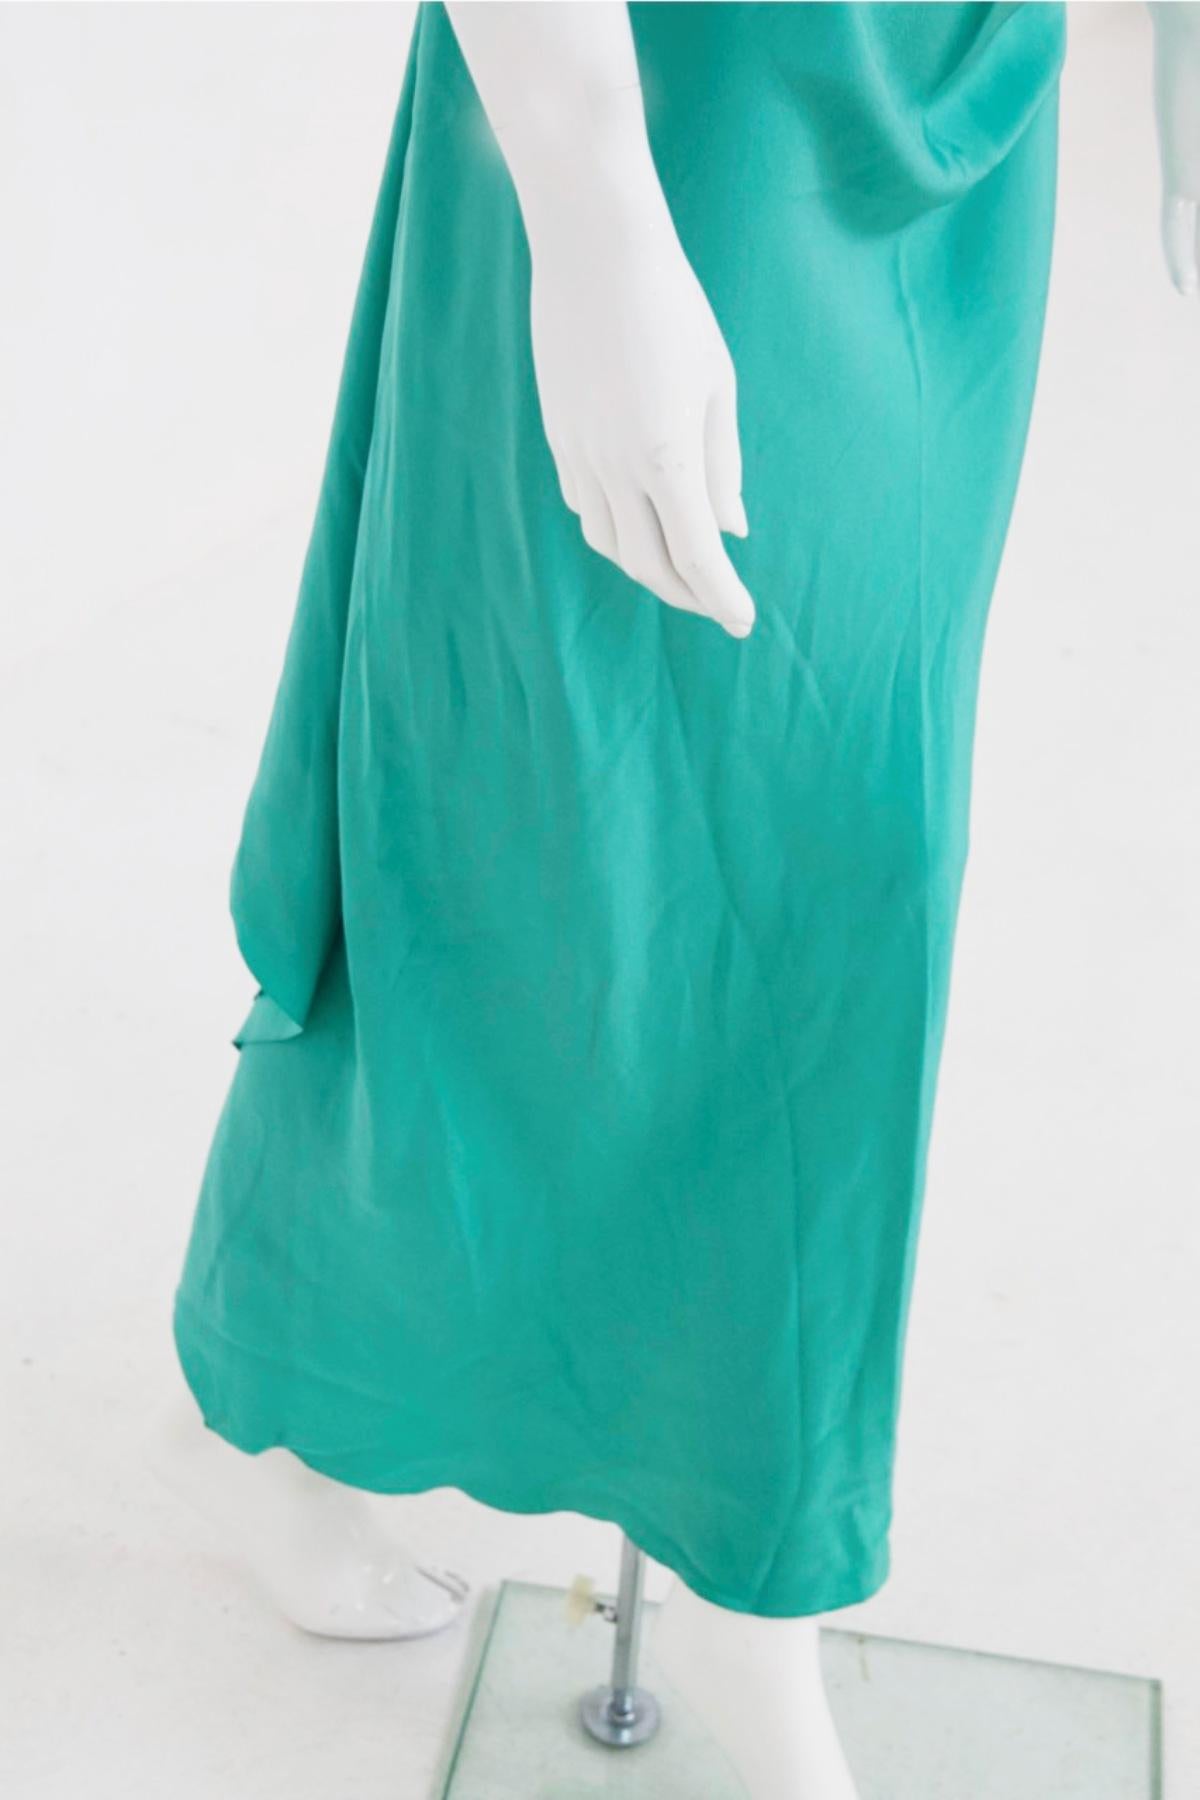 Blue Pierre Cardin Vintage Teal Long Dress For Sale